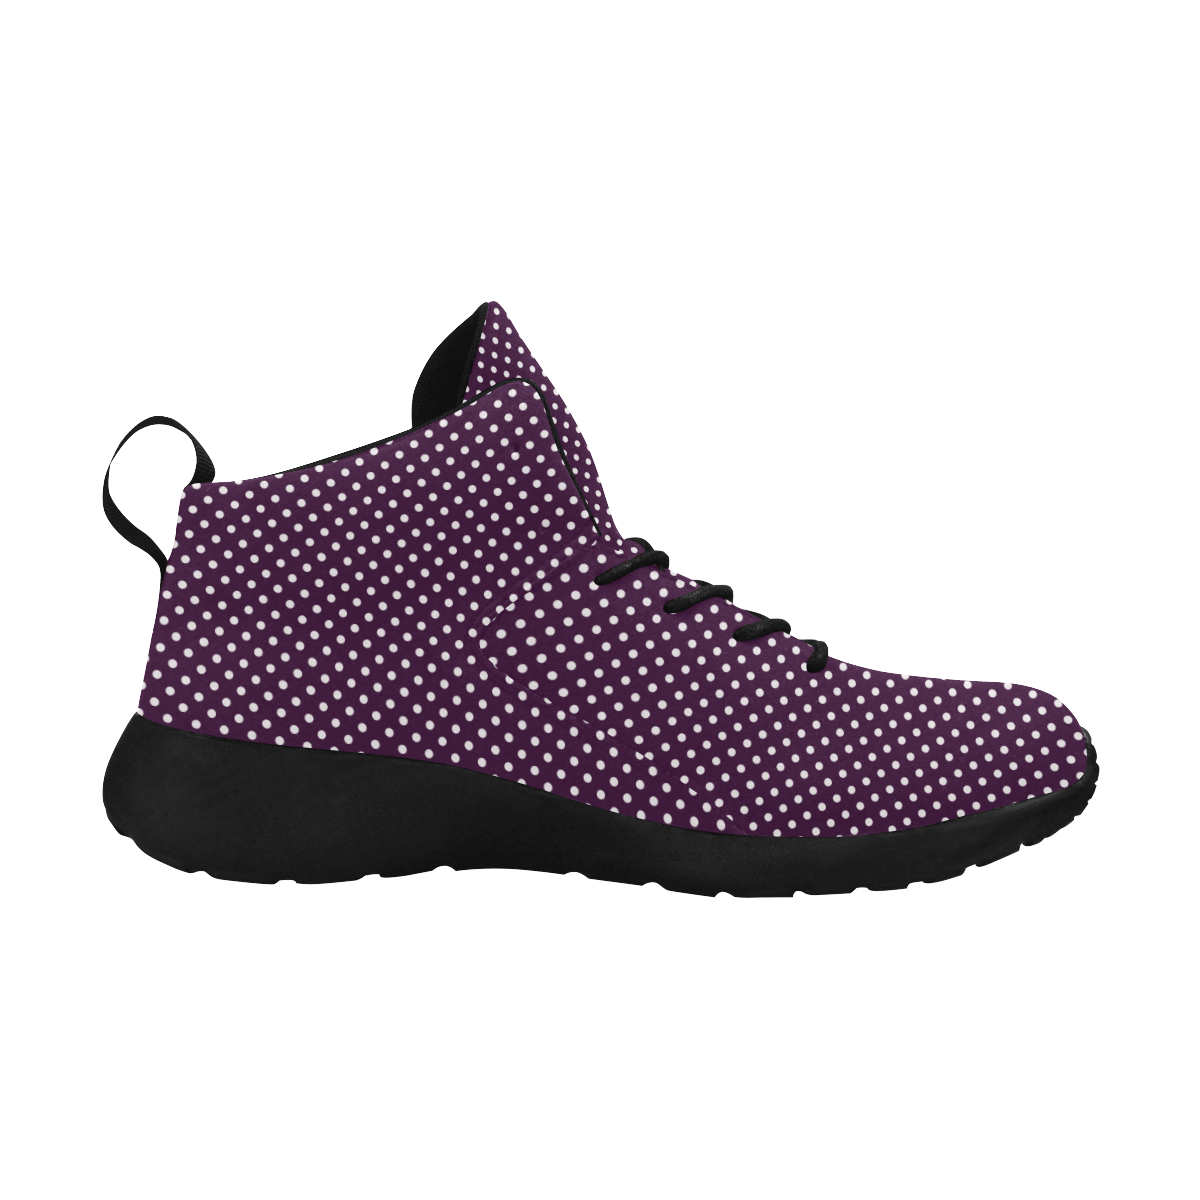 Burgundy polka dots Women's Chukka Training Shoes (Model 57502)